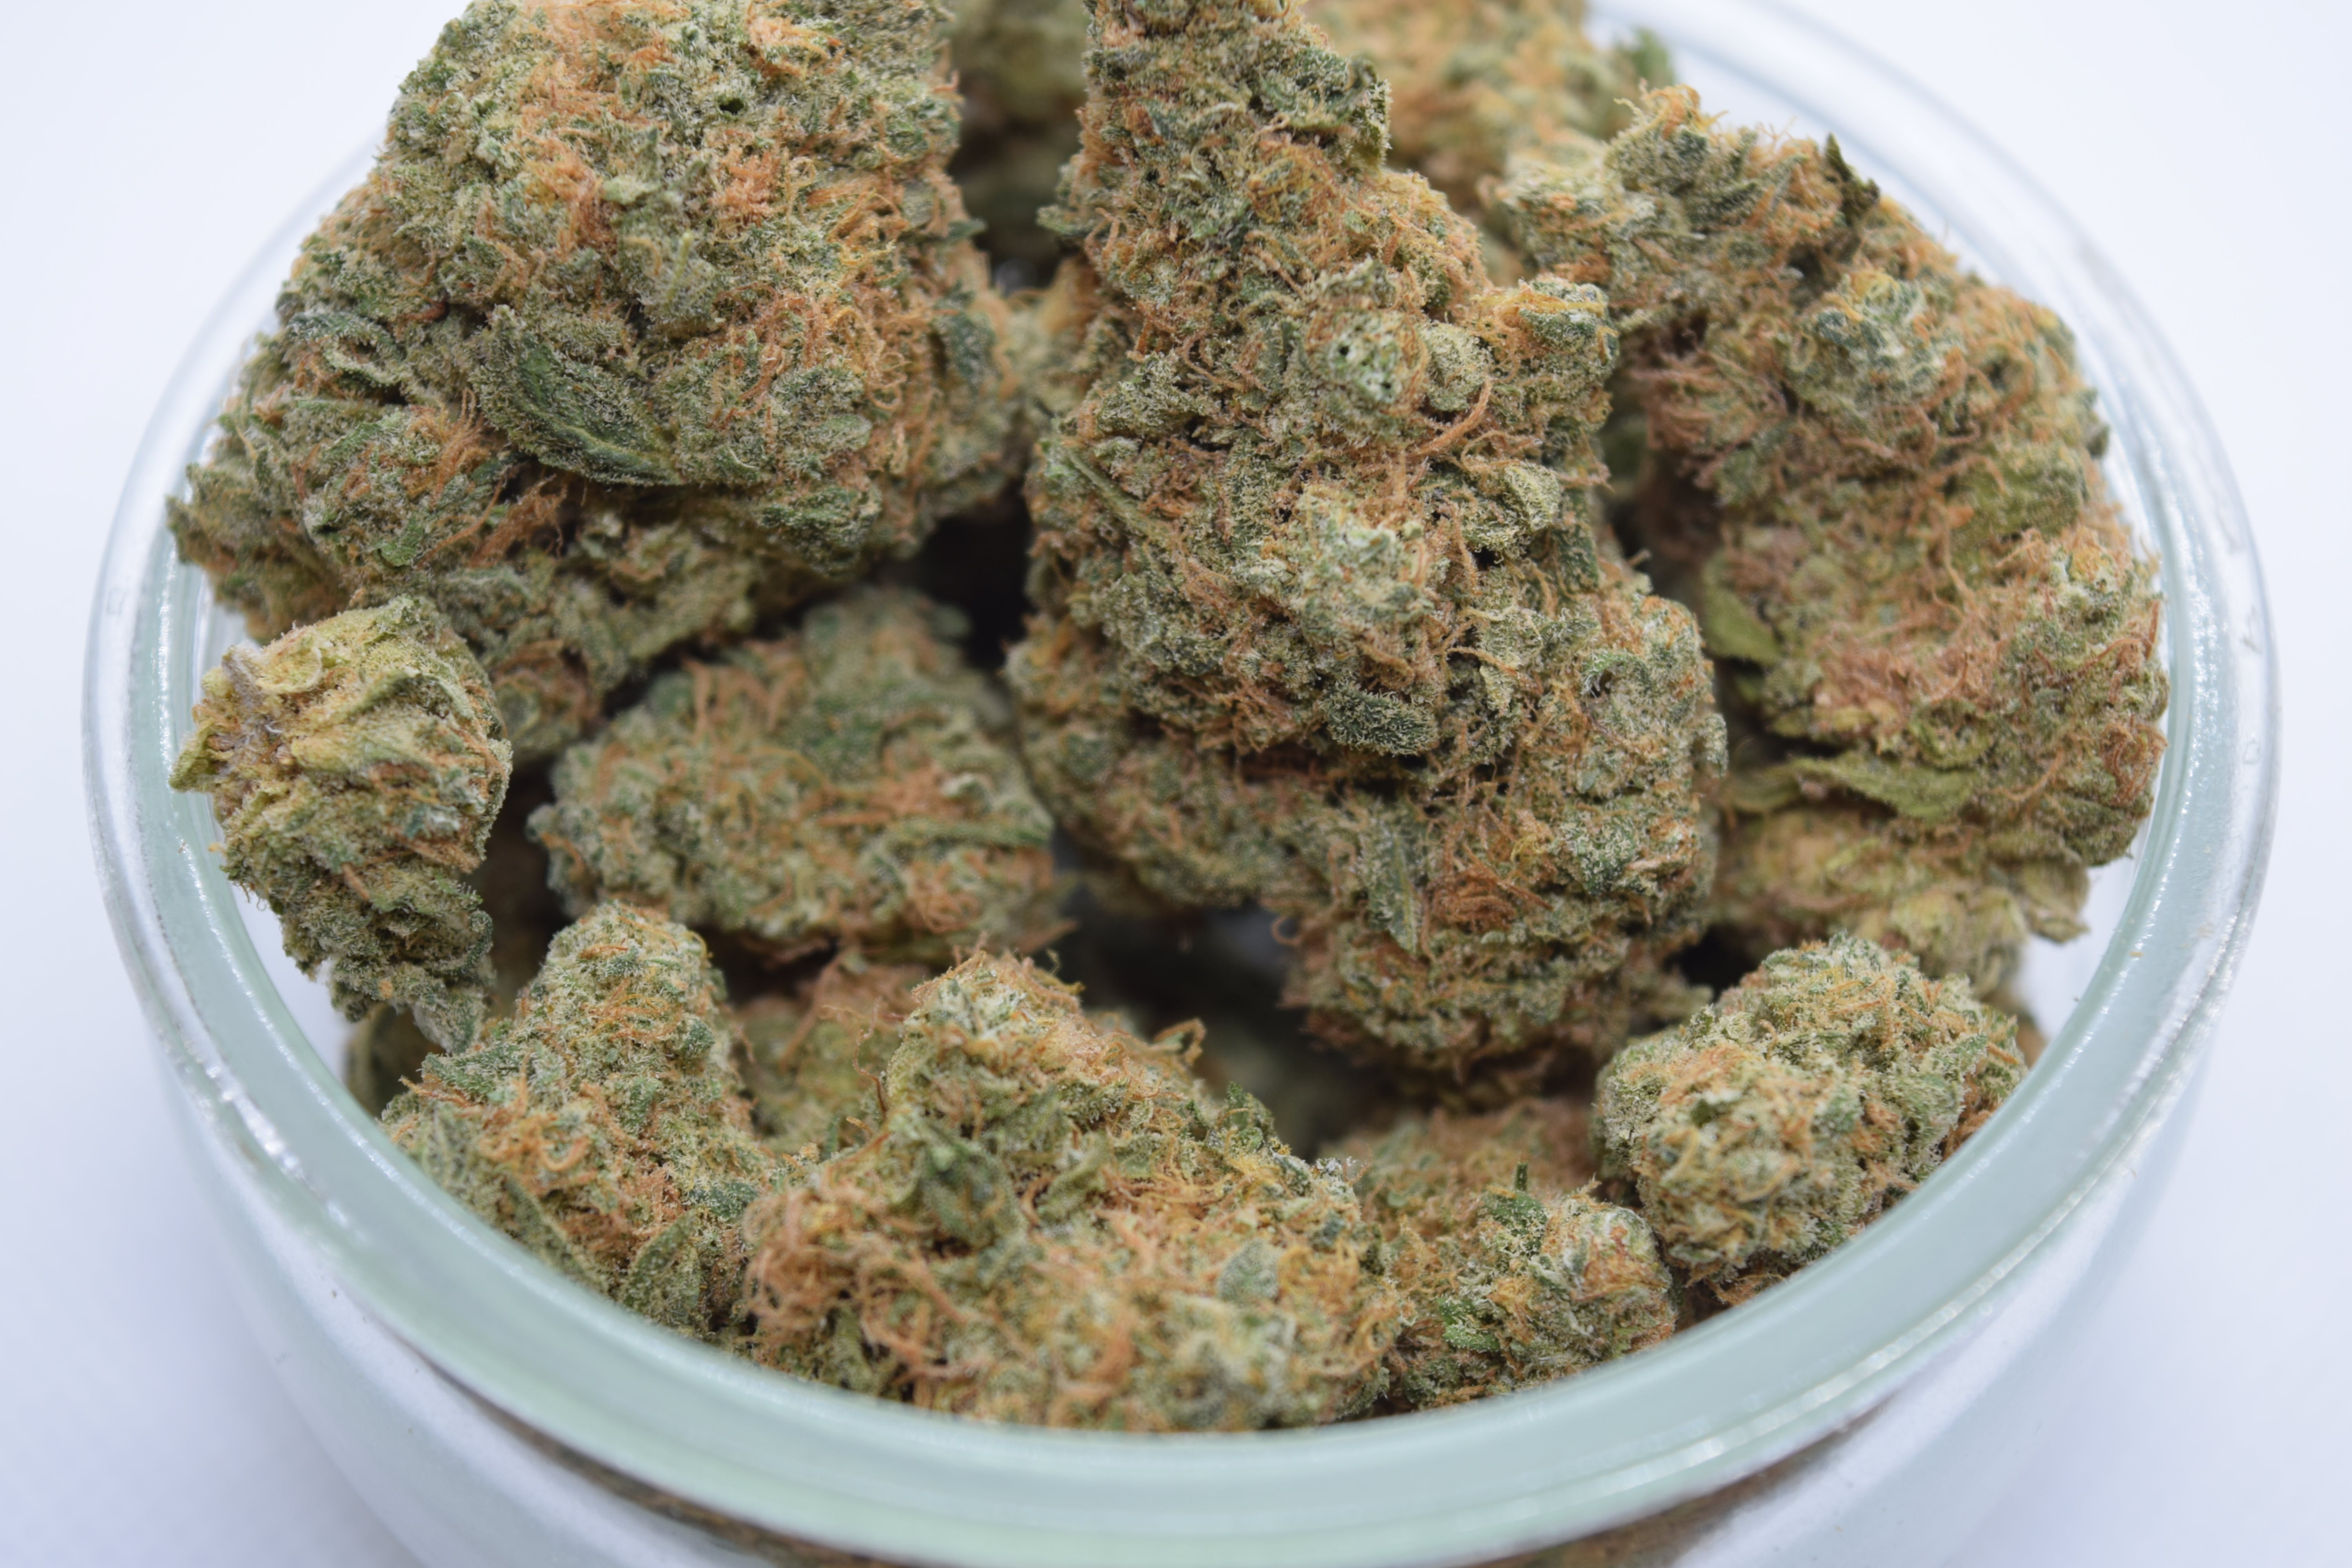 marijuana-dispensaries-27585-commerce-center-drive-2c-suite-a-temecula-top-tropical-skittles